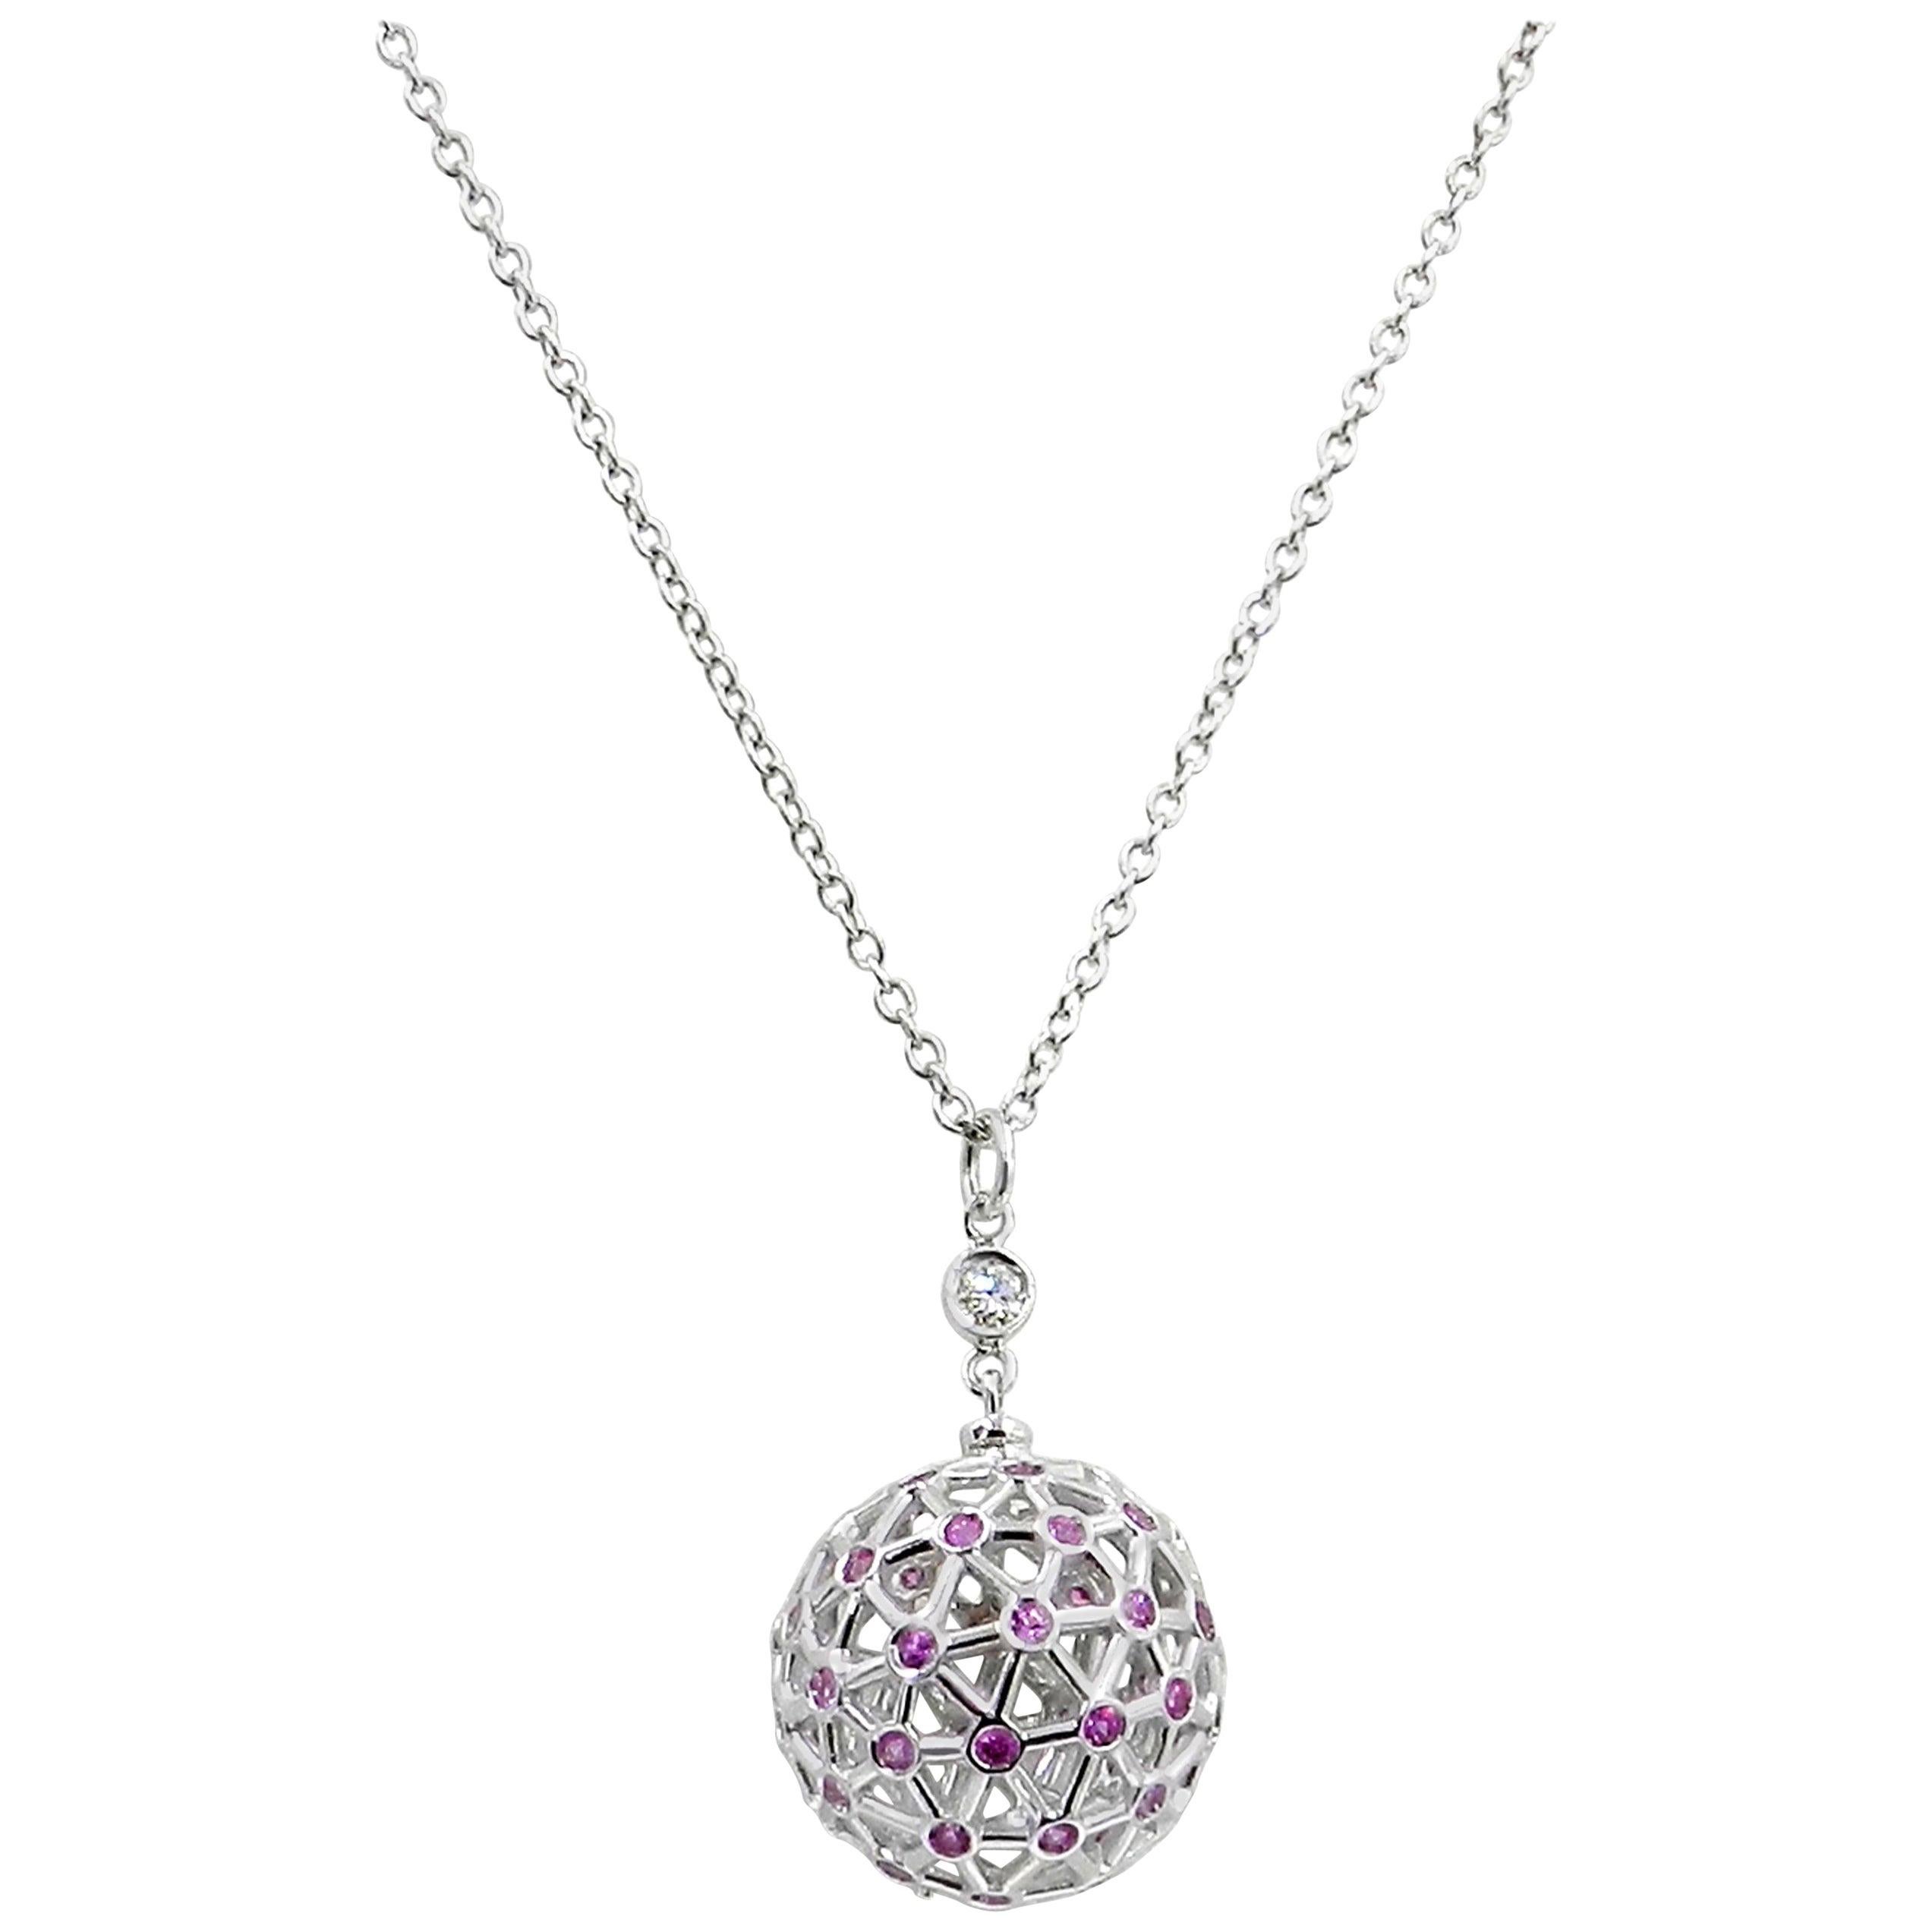 18 Karat White Gold Diamond and Pink Sapphires Garavelli Globo Pendant Necklace